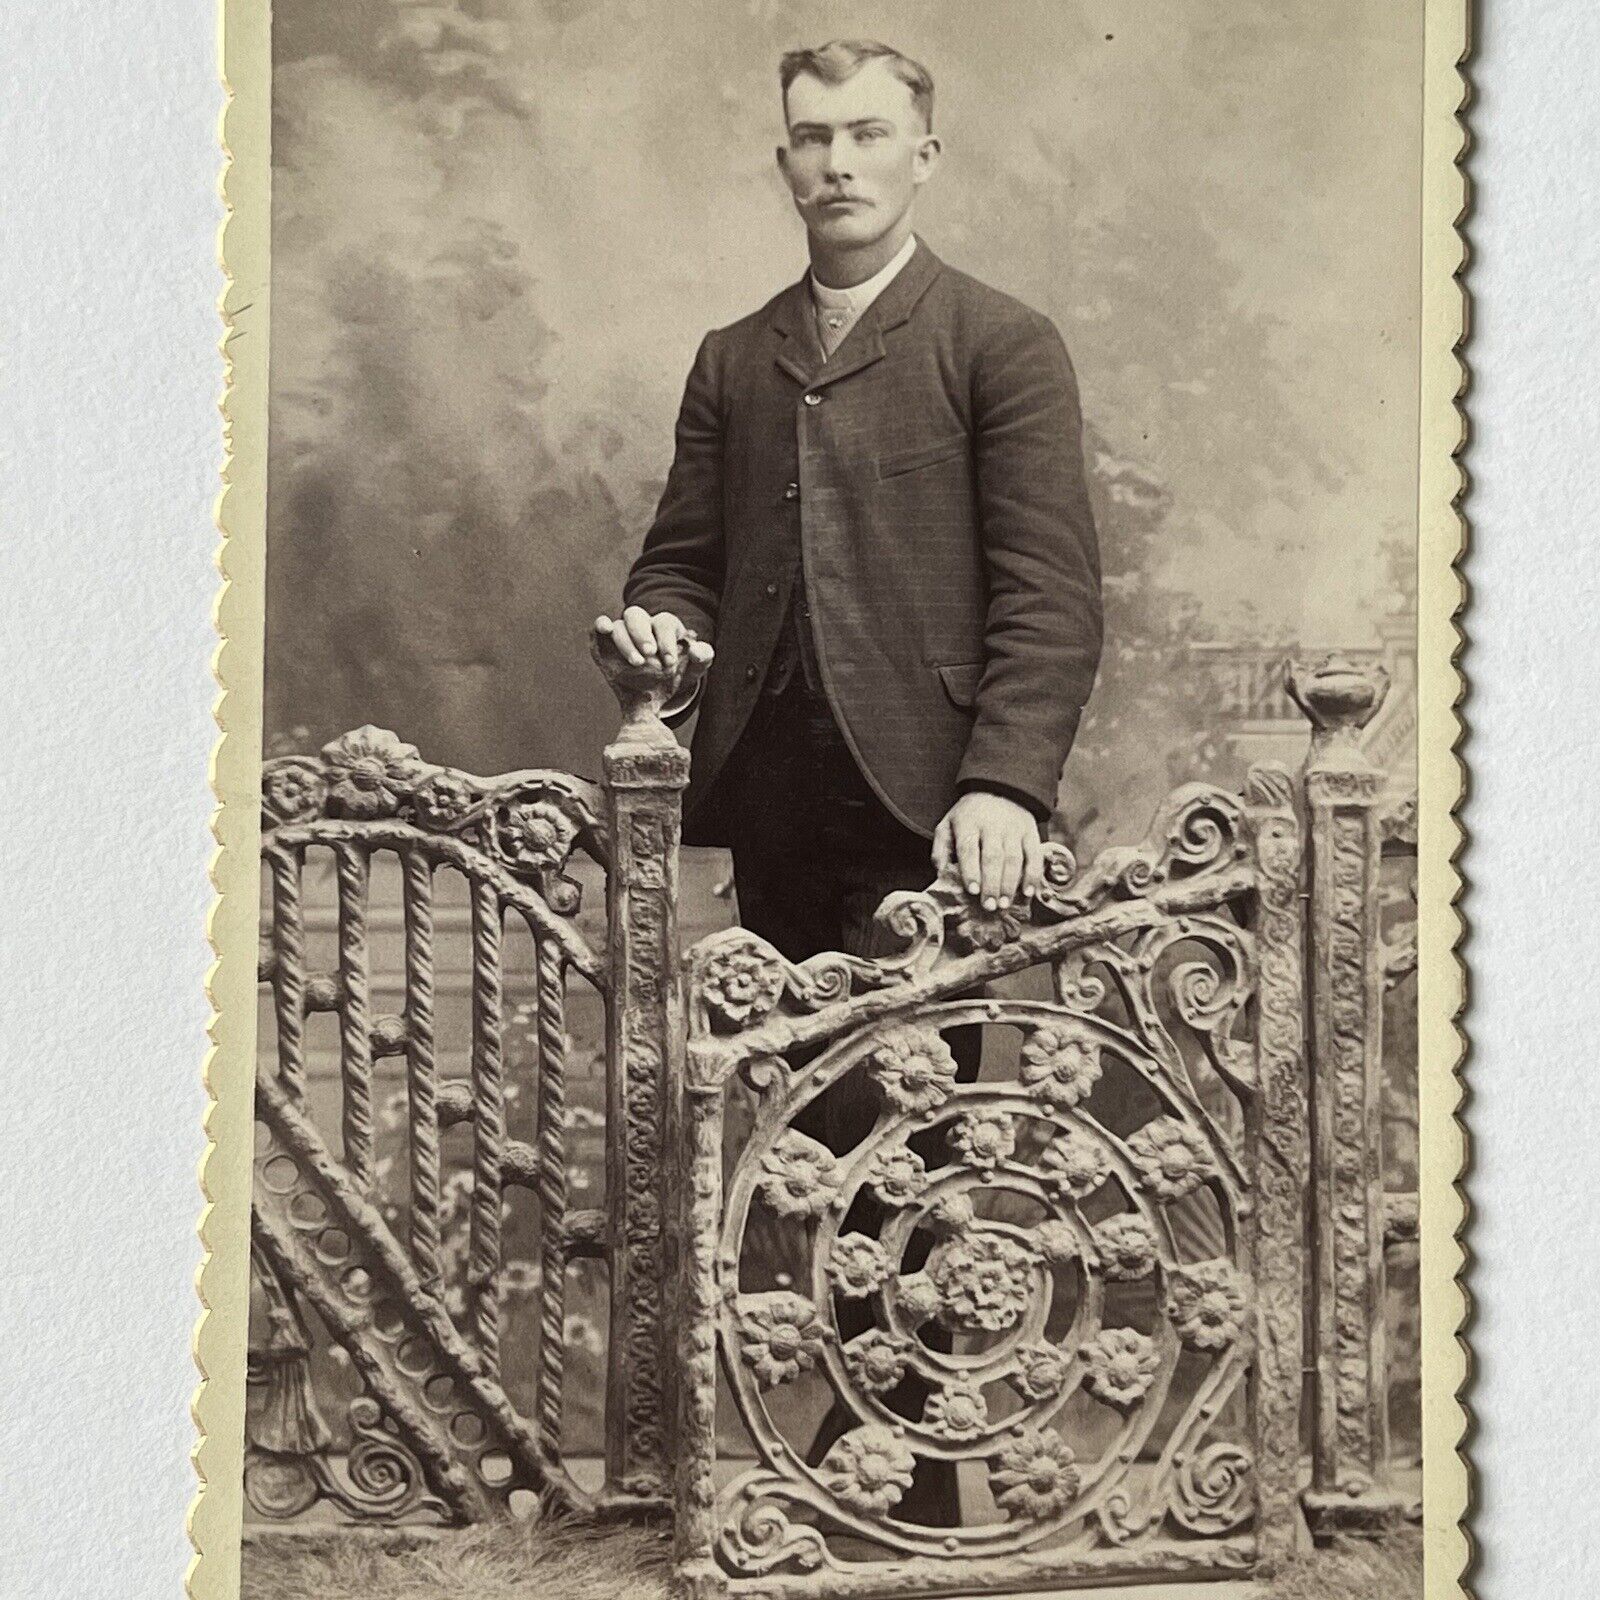 Antique Cabinet Card Photograph Very Handsome Man Great Gate Prop Walla Walla WA